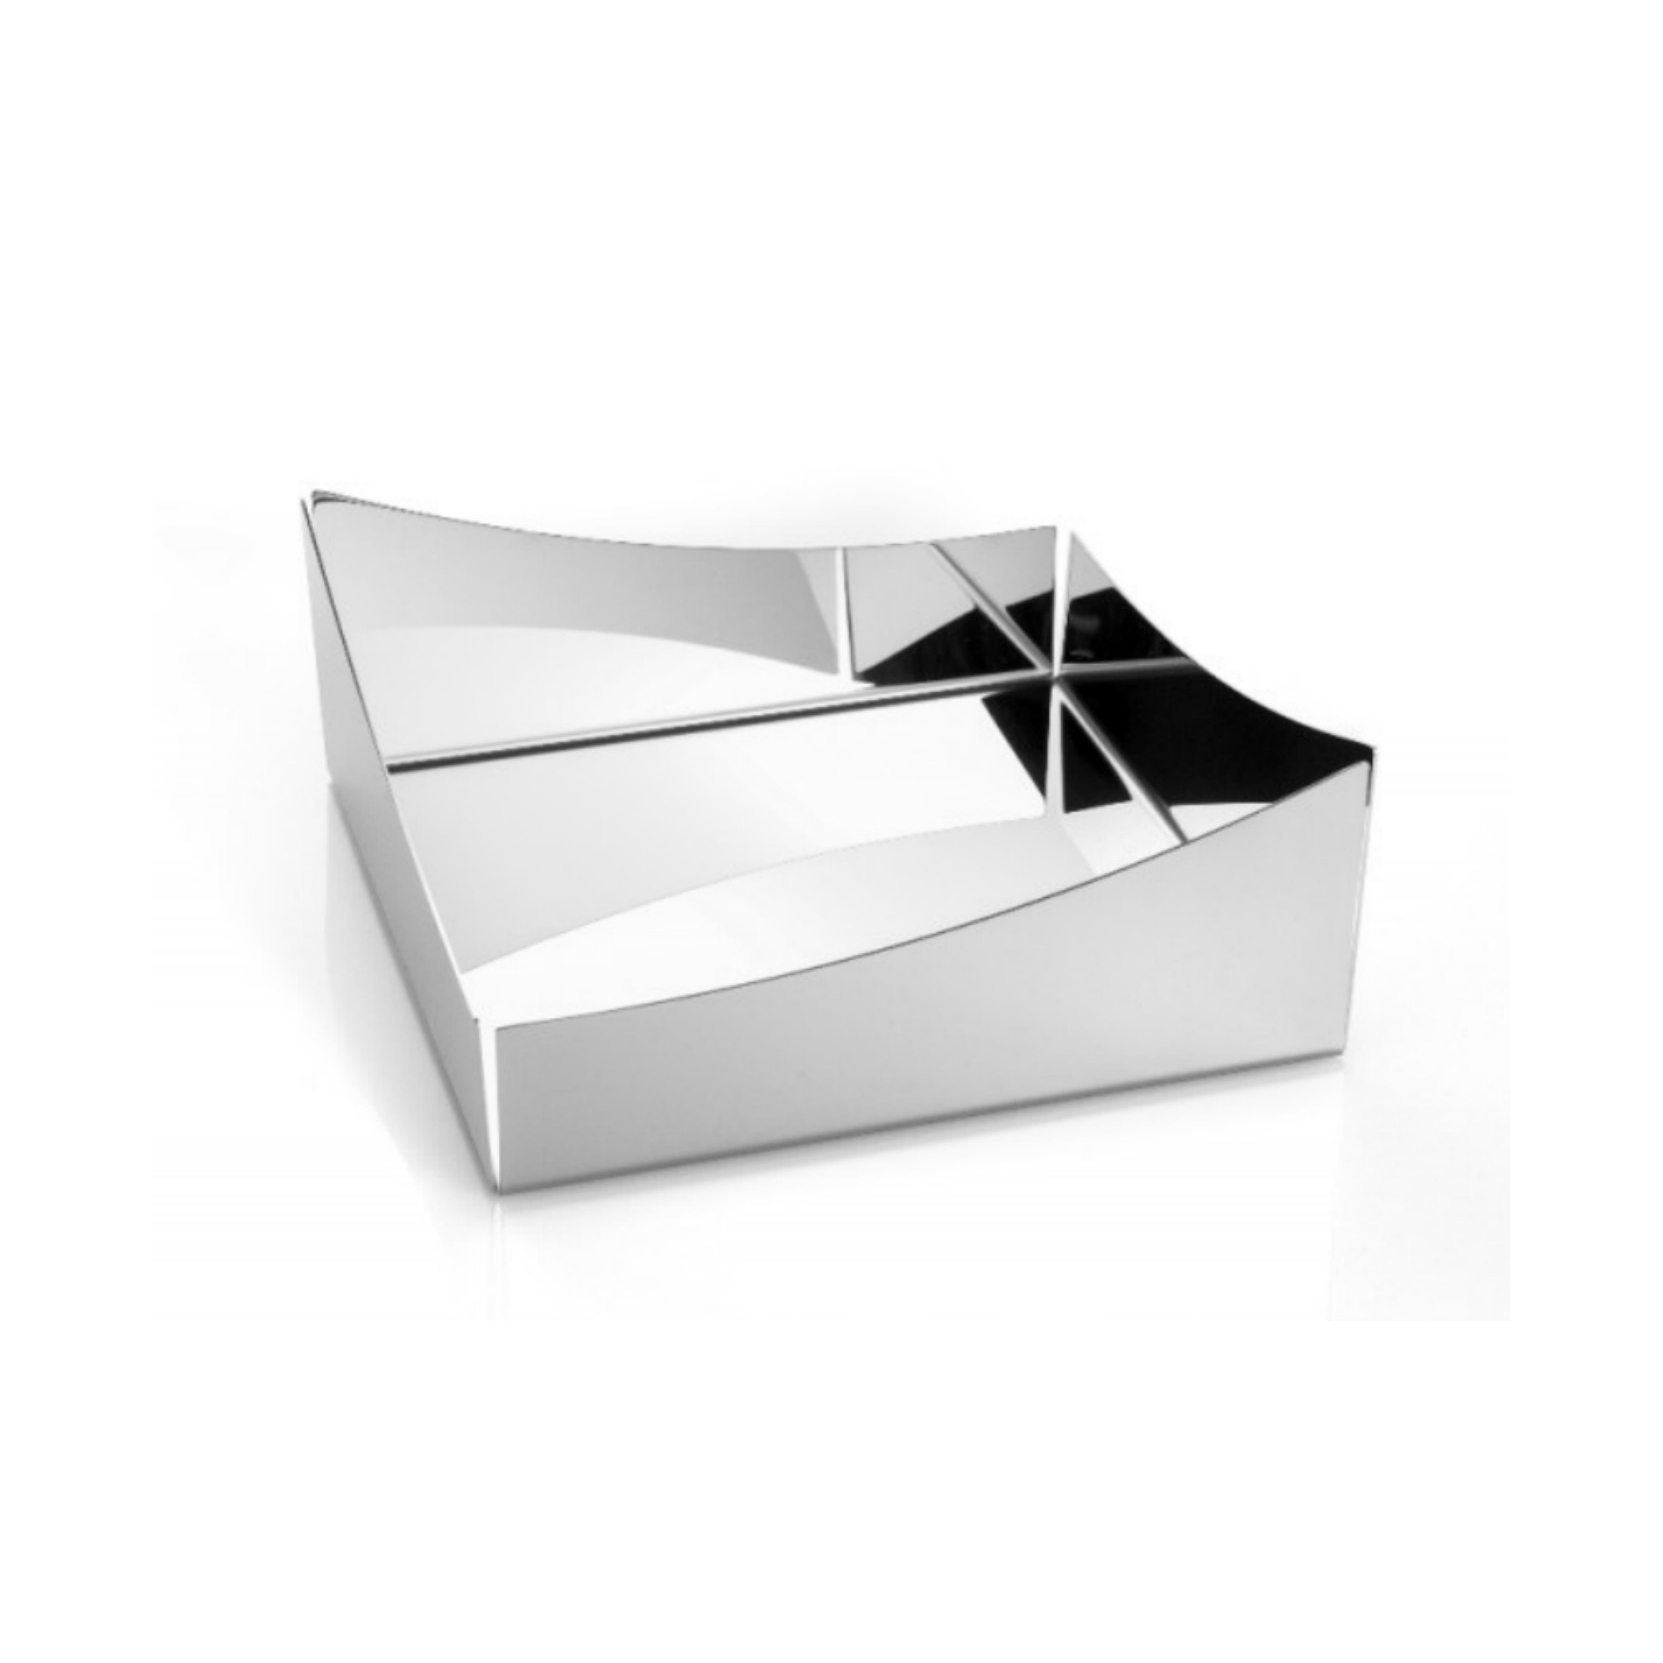 https://www.vinciguerrashop.com/11874-thickbox_default/promo-napkin-holder-in-1810-stainless-steel-elleffe-design.jpg